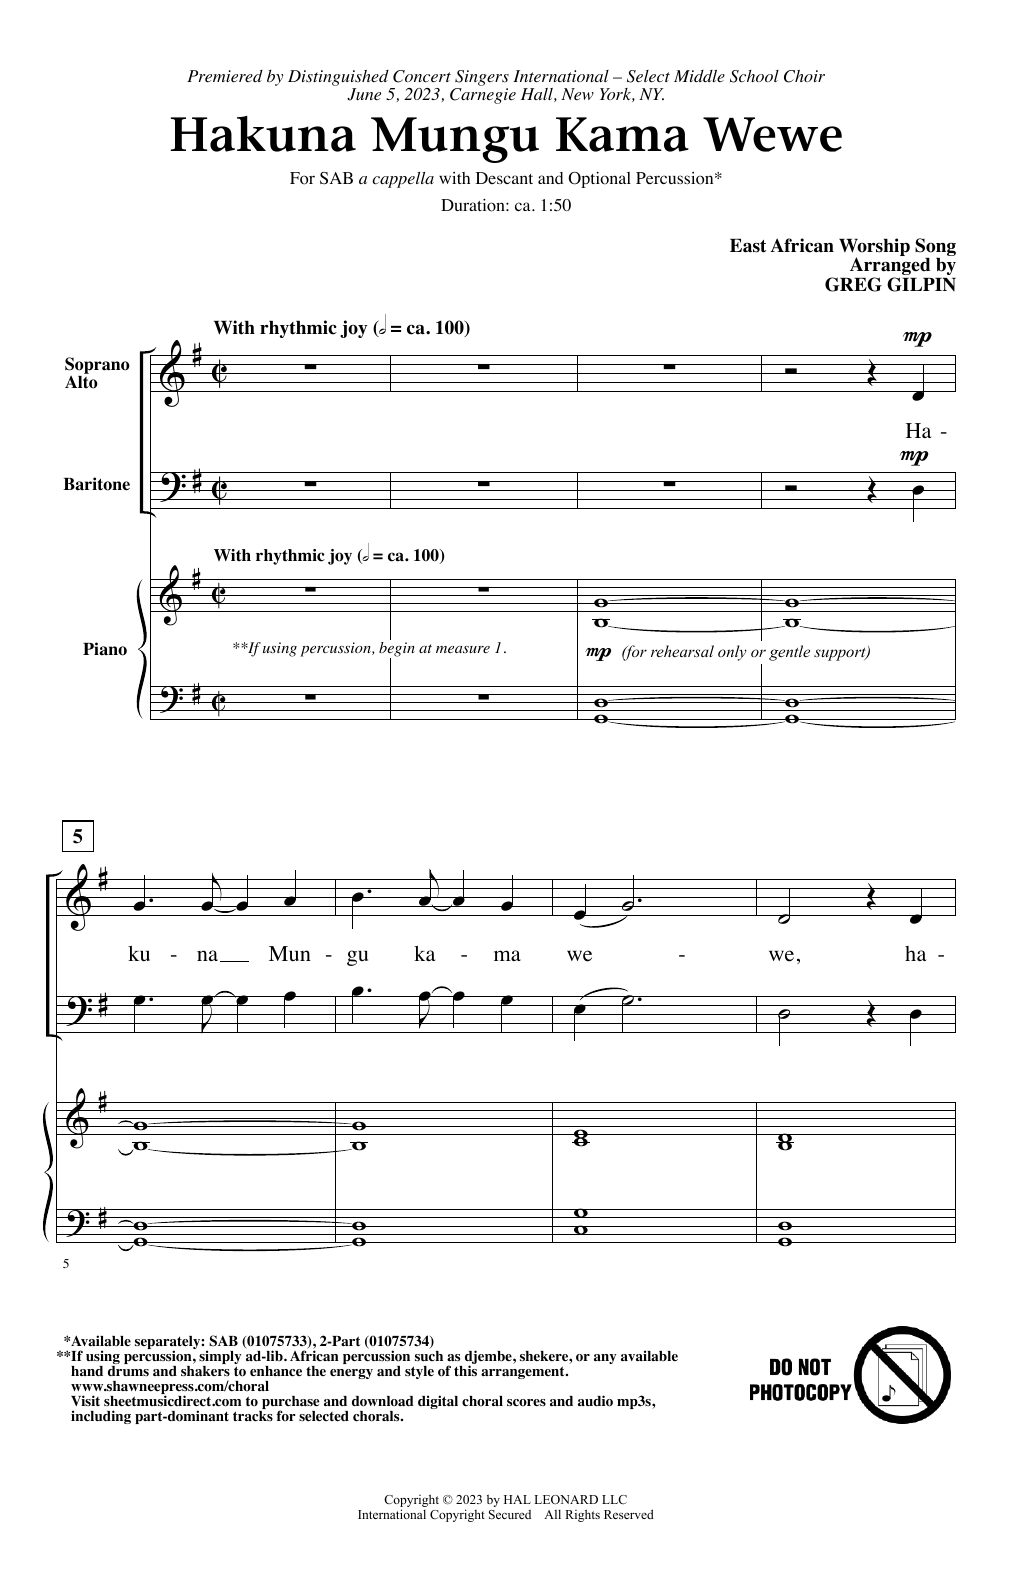 Download Greg Gilpin Hakuna Mungu Kama Wewe Sheet Music and learn how to play SAB Choir PDF digital score in minutes